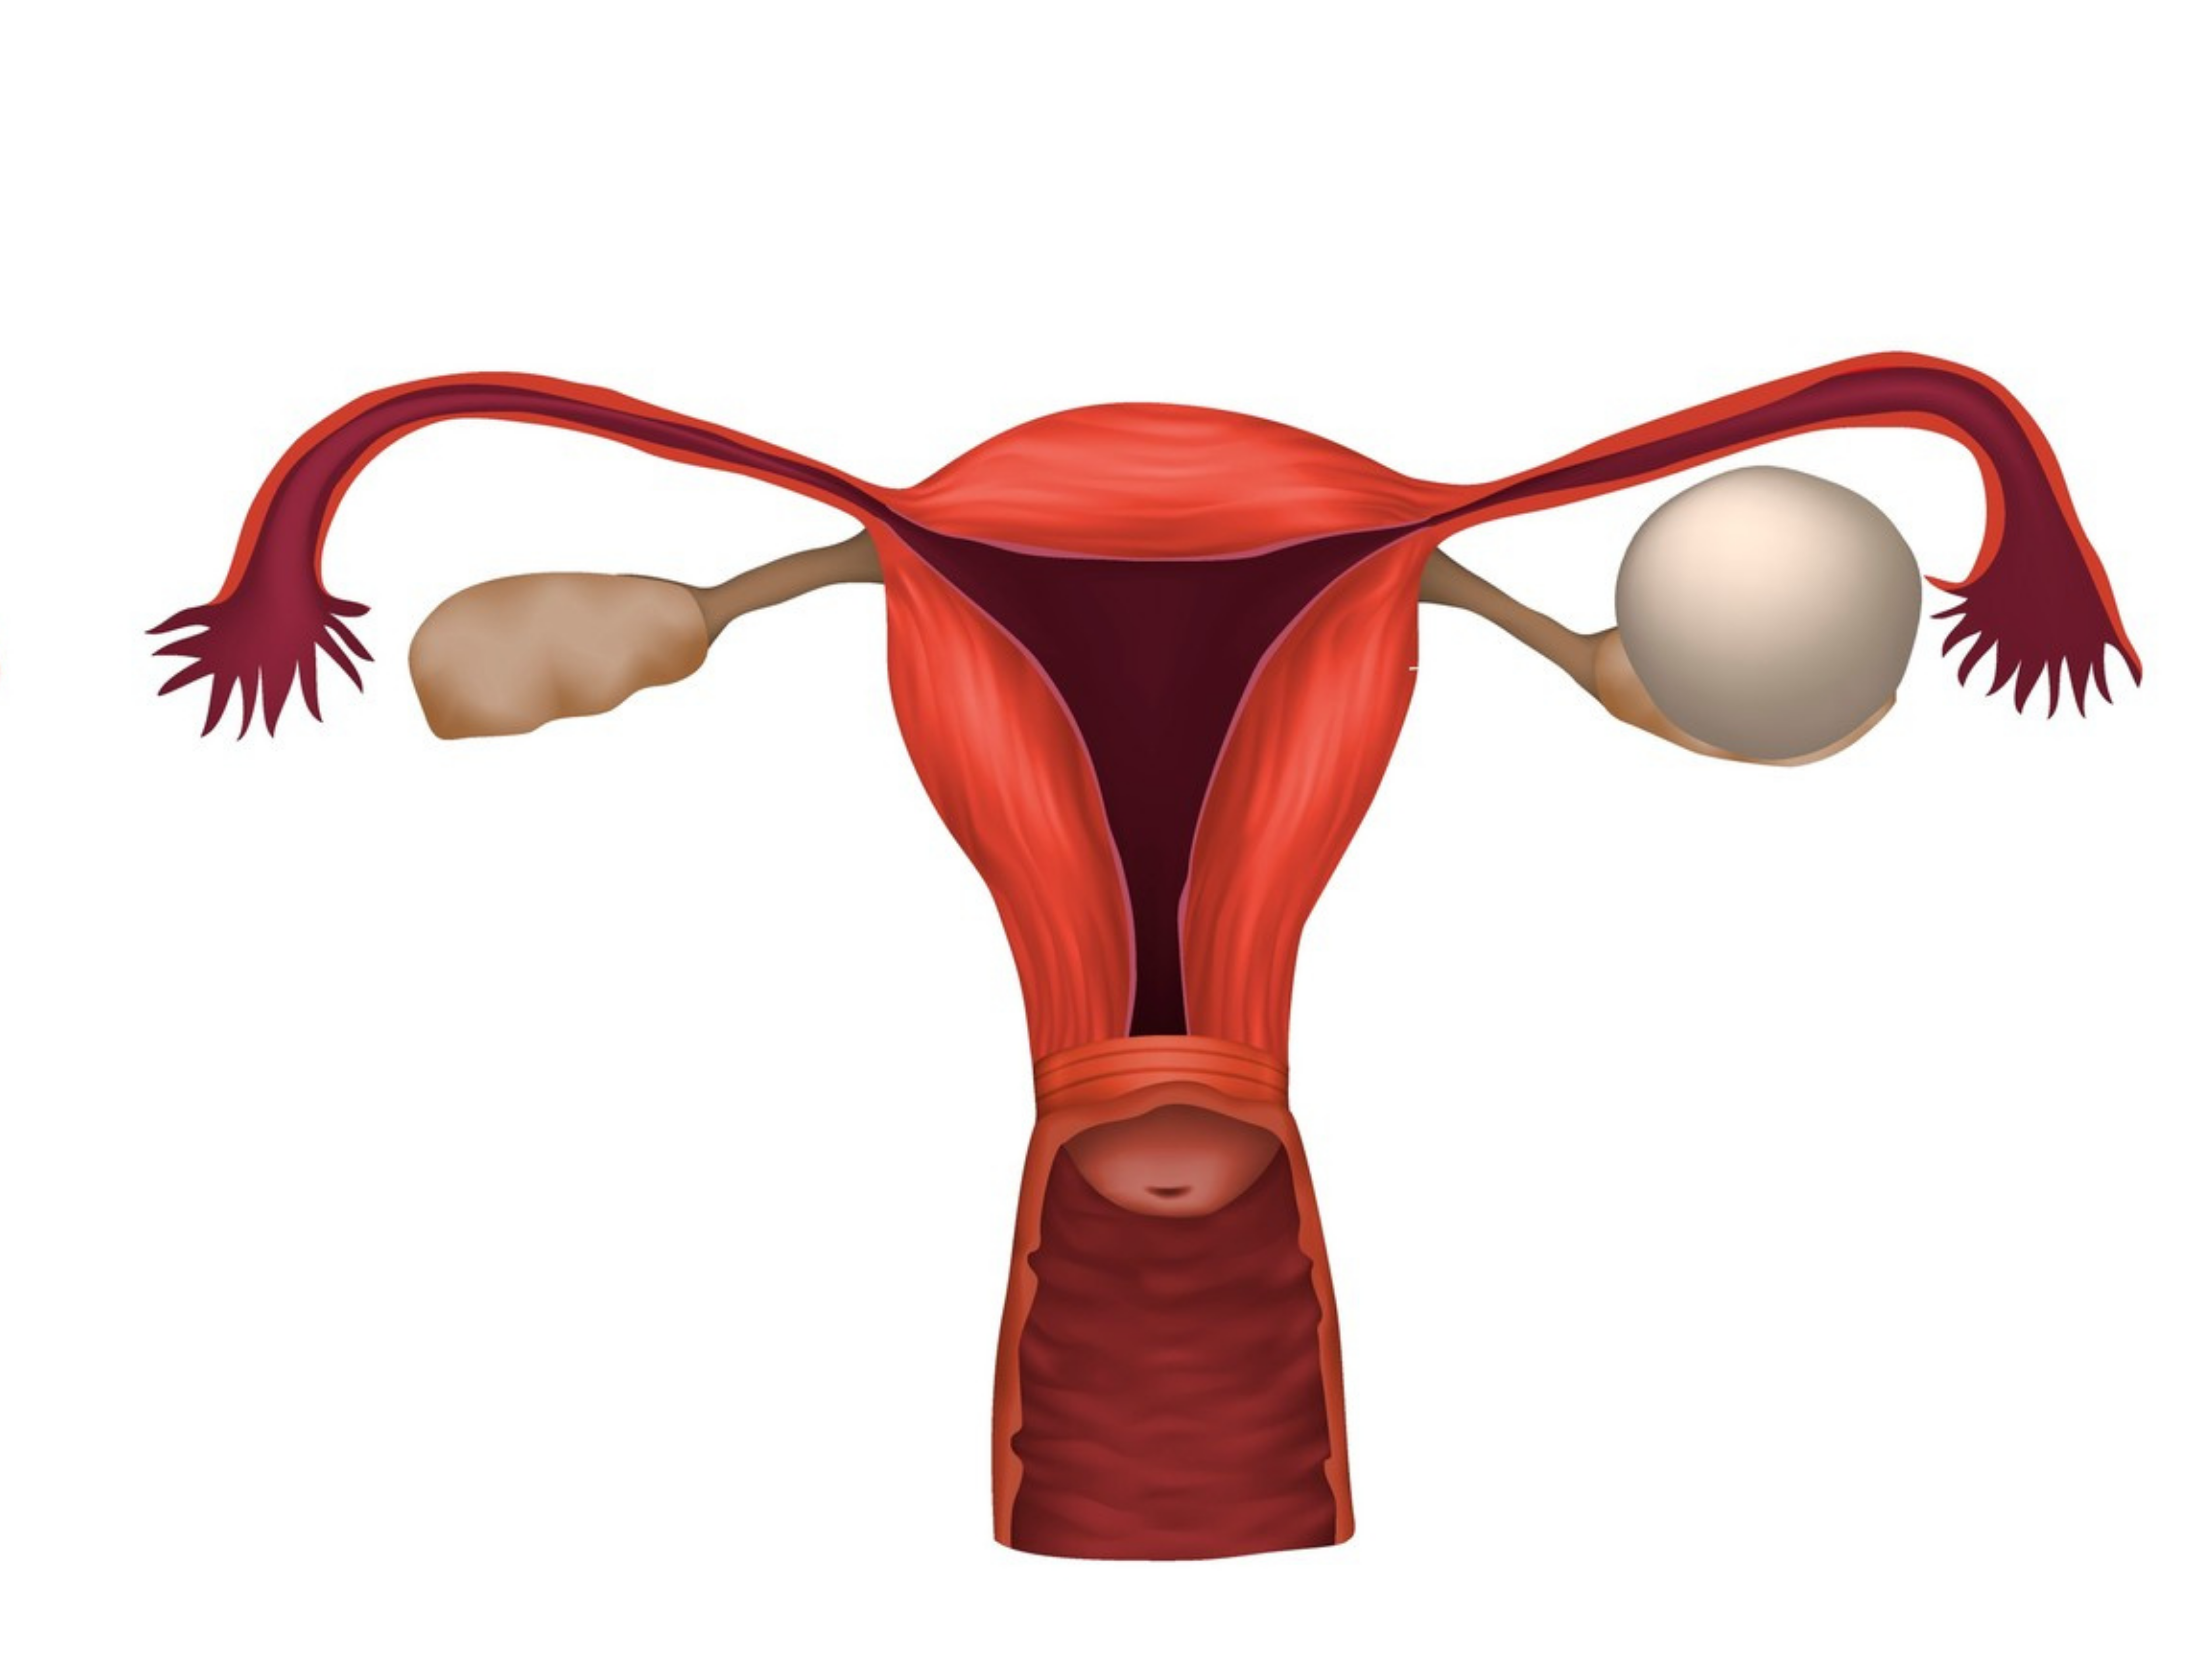 Cisto hemorrágico altera a fertilidade feminina?